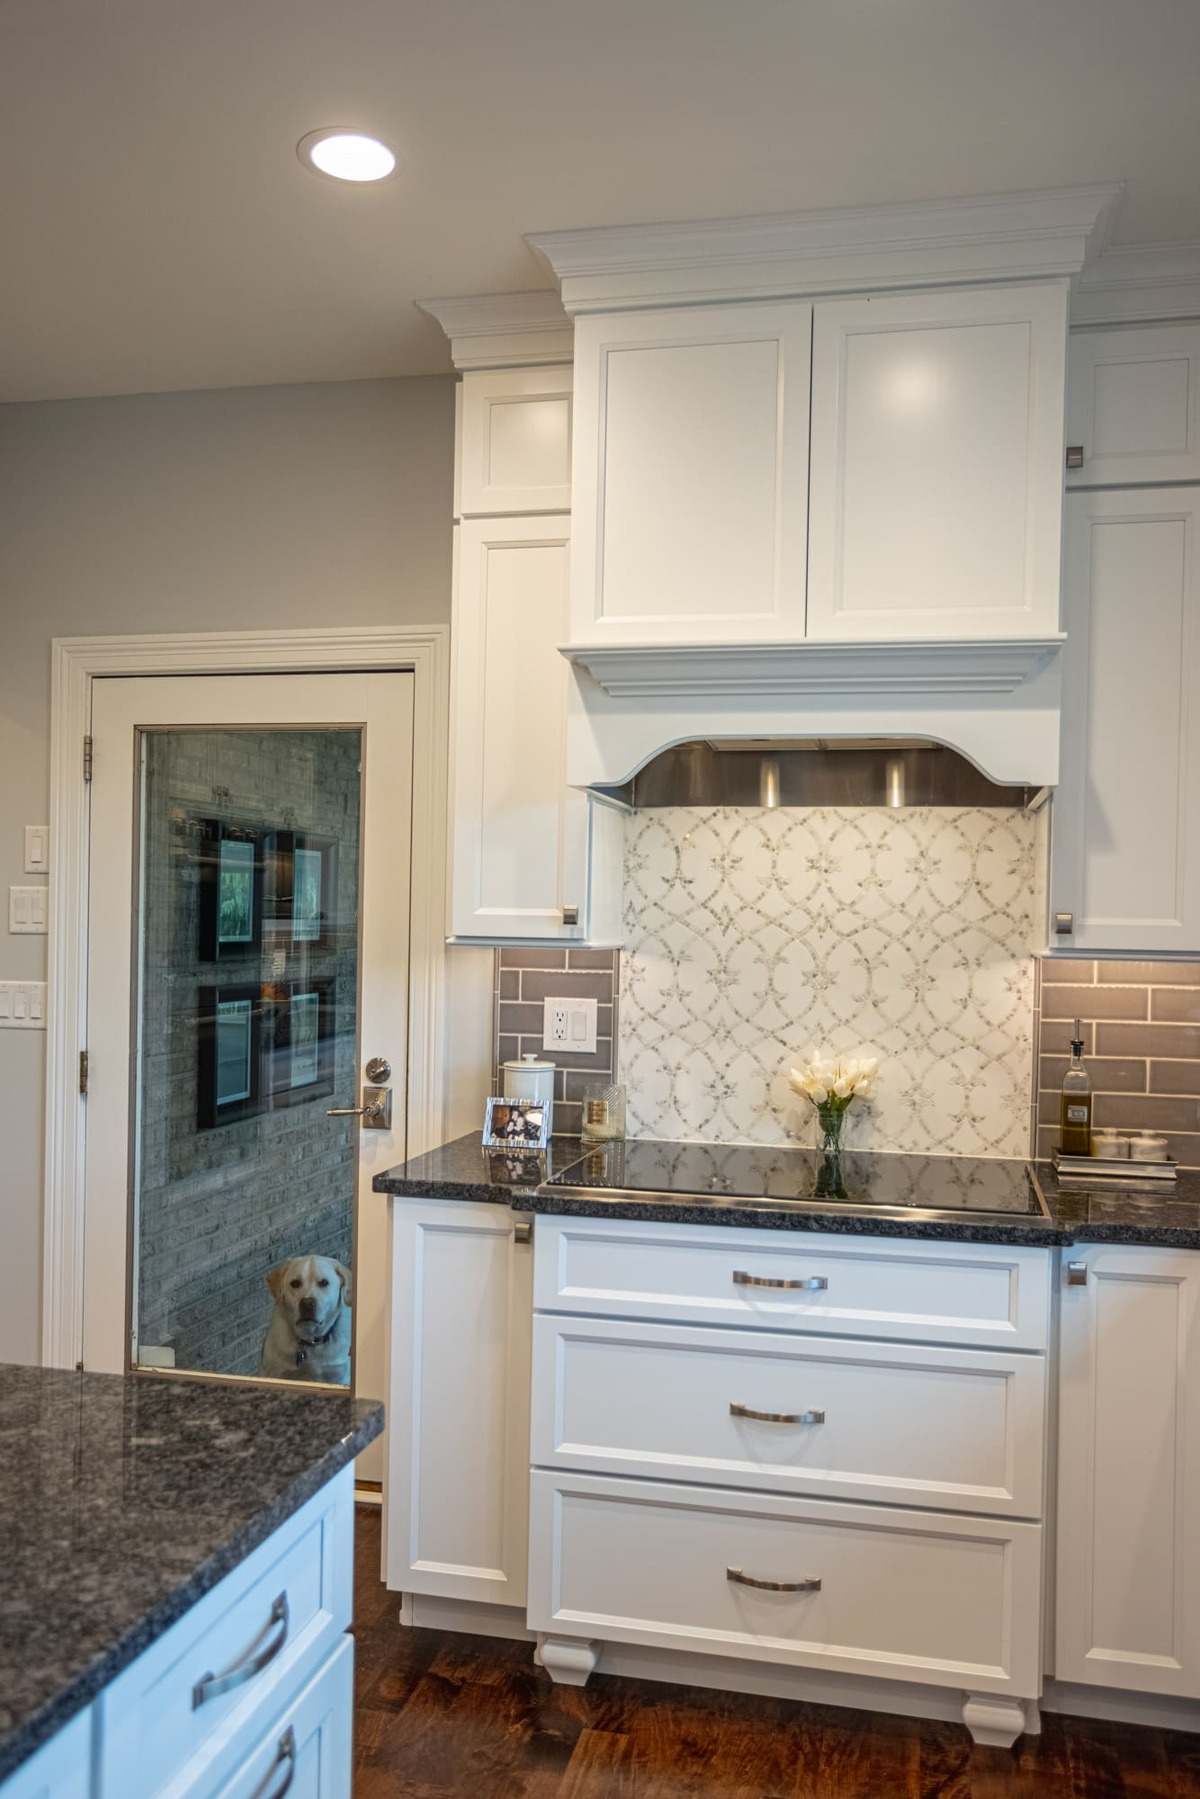 Kitchen range hood with pattern backsplash and shaker cabinets